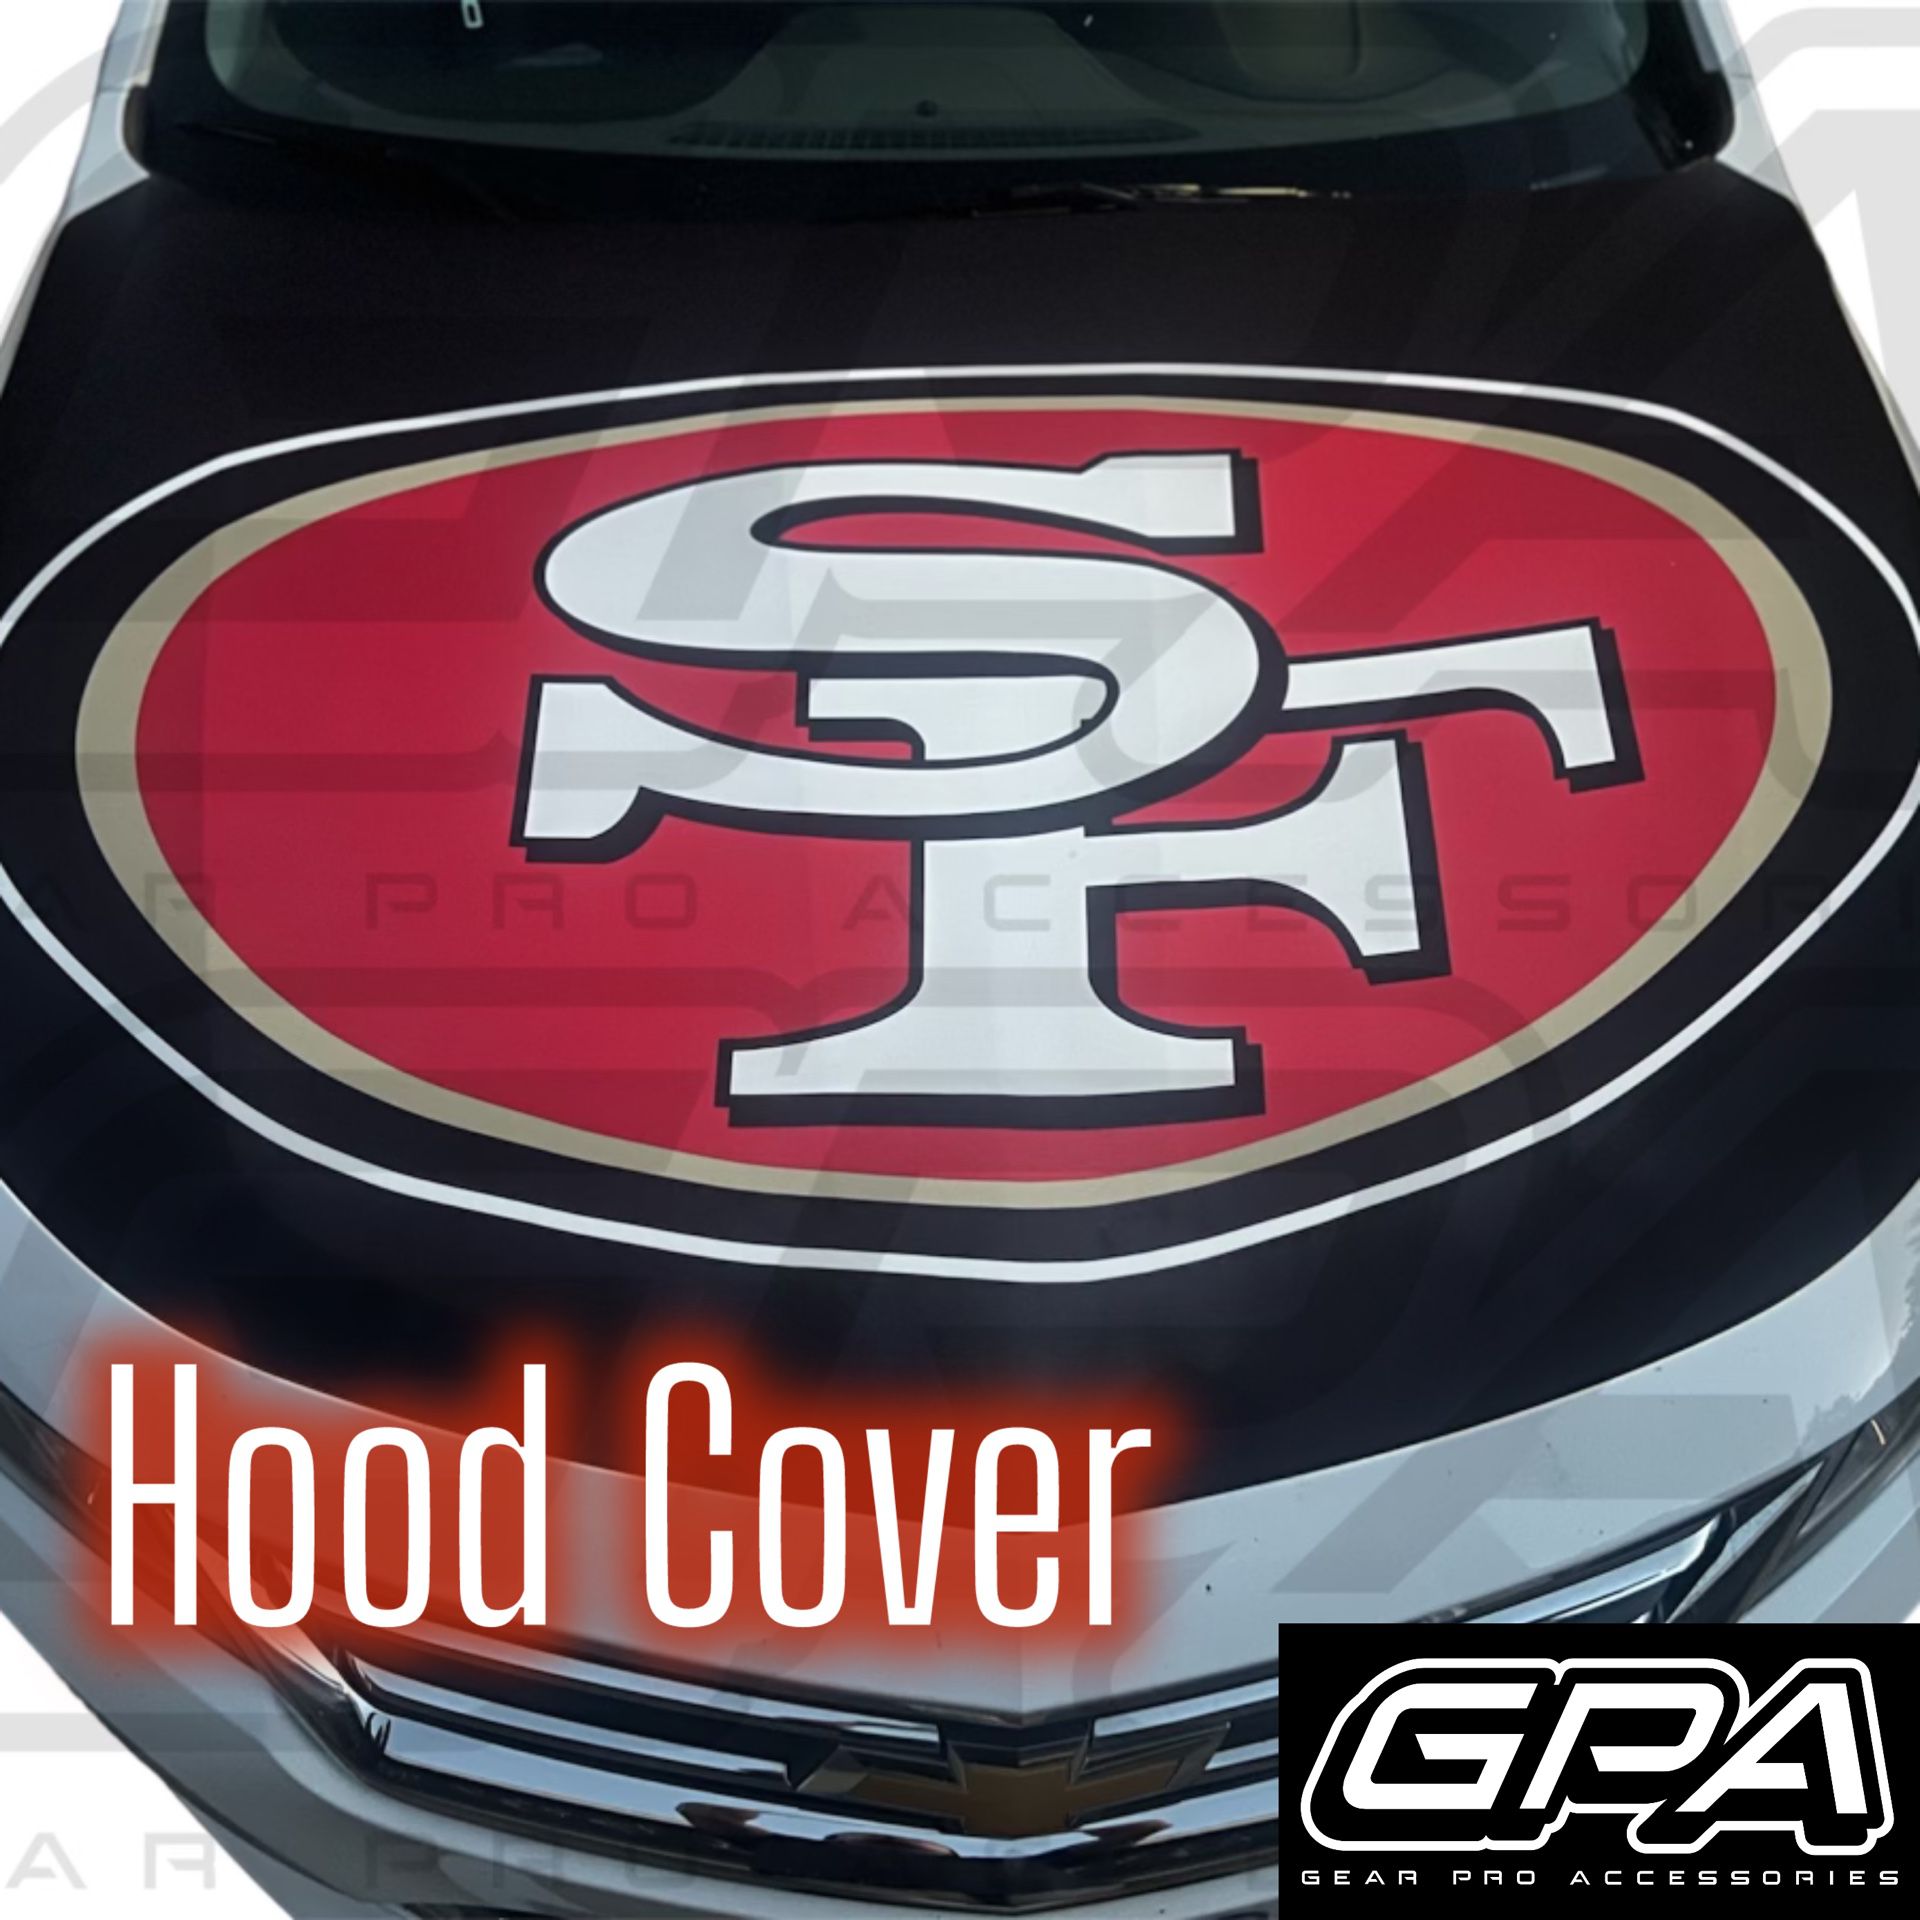 49ers Car Hood Cover NFL 